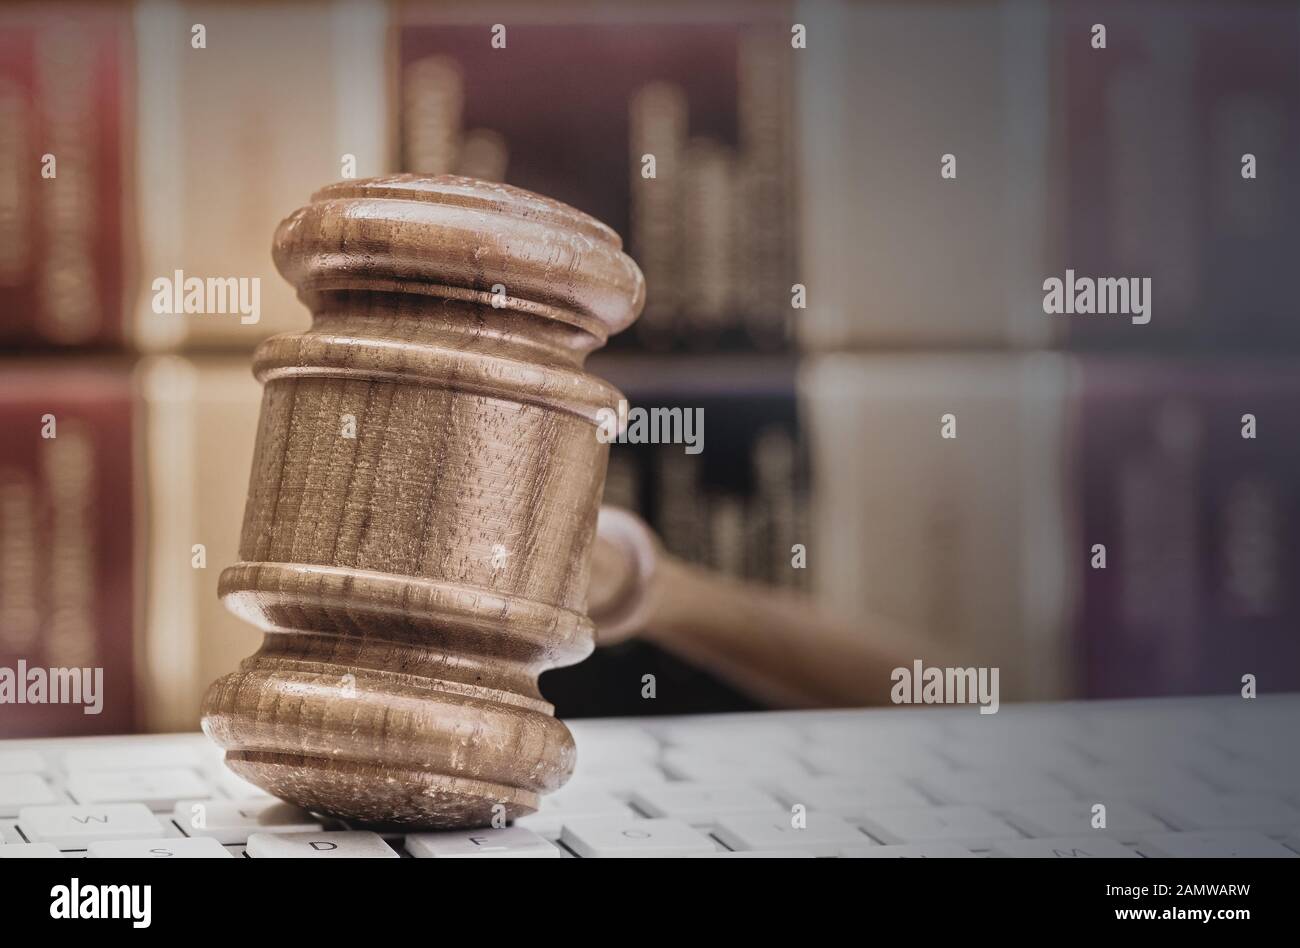 Legal law and crime enforcement image concepts Stock Photo